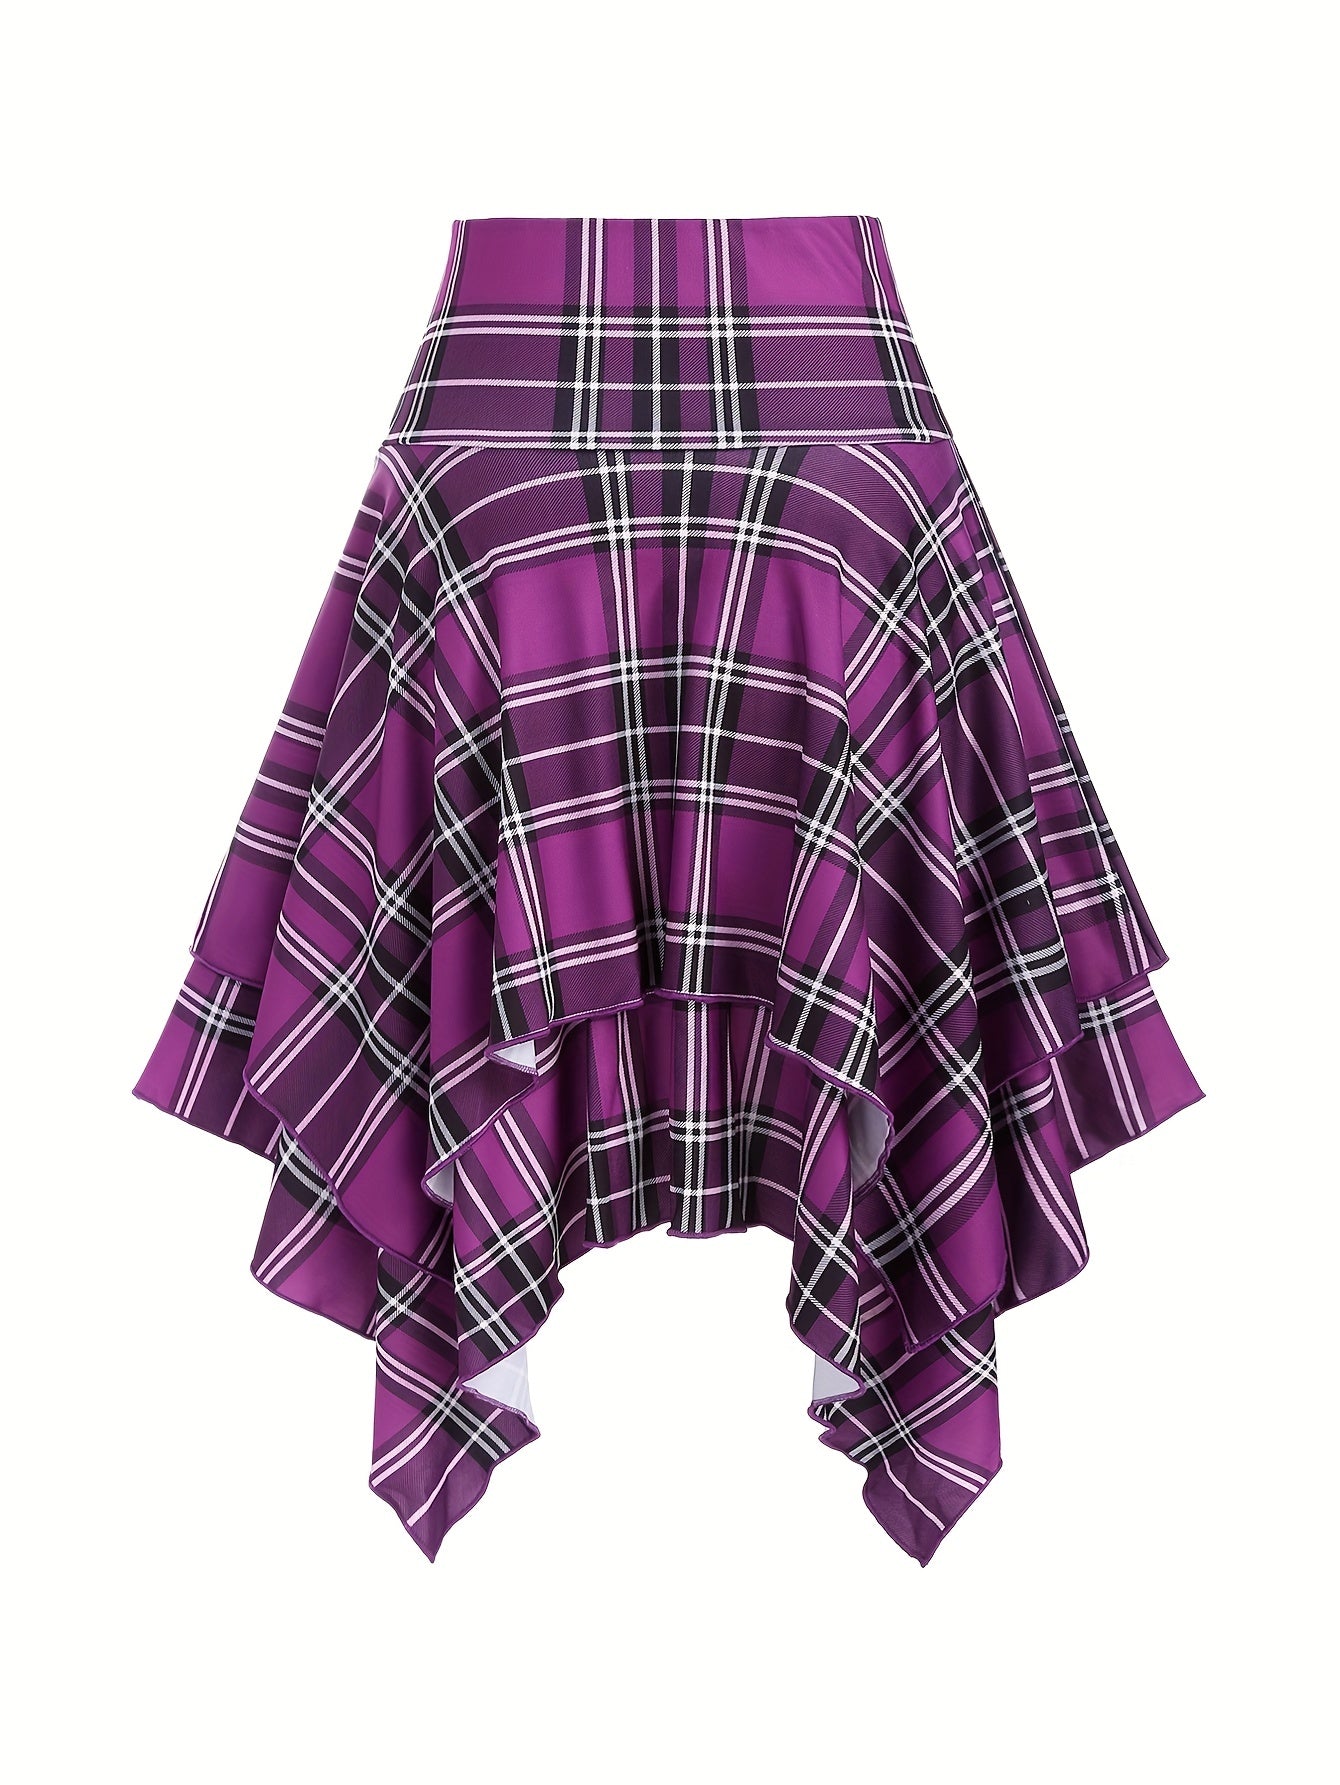 vlovelaw  Plaid Print Irregular Hem Skirt, Casual Tie Front High Waist Skirt, Women's Clothing